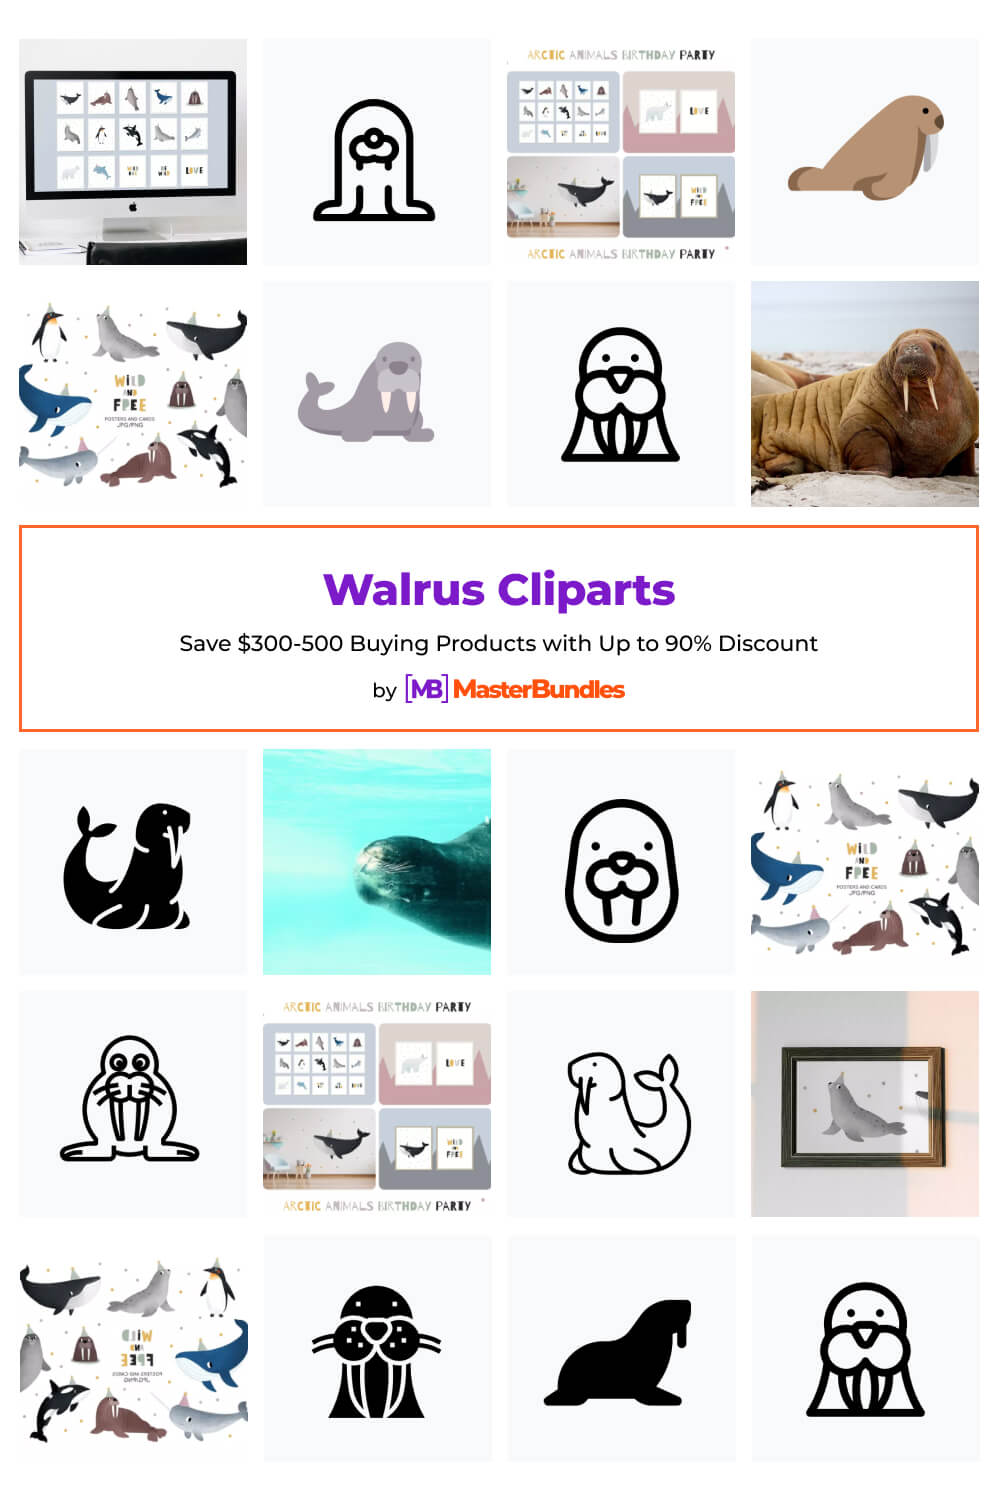 walrus cliparts pinterest image.